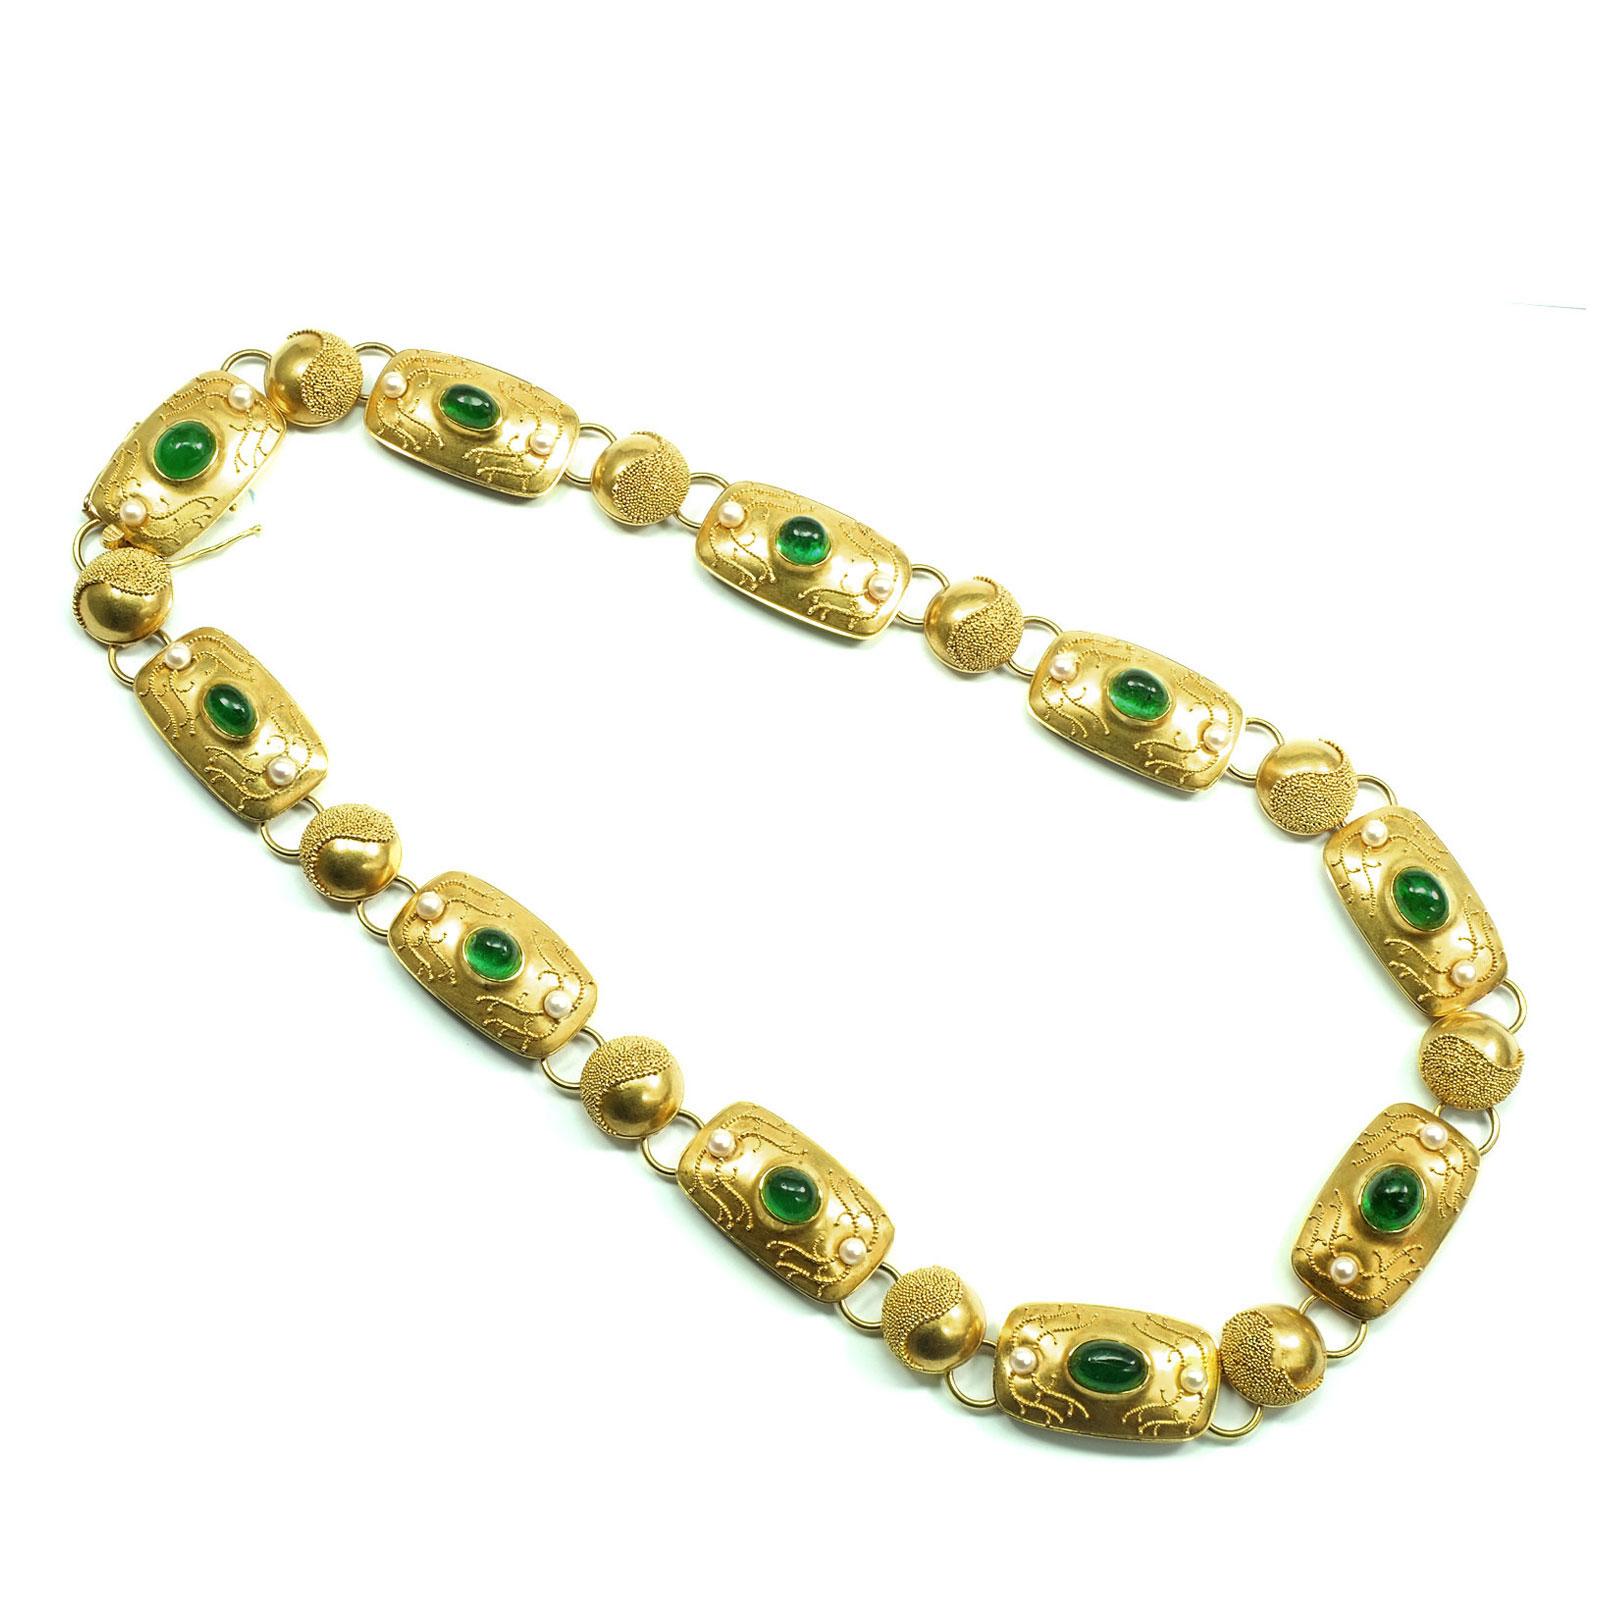 9 carat gold choker necklace